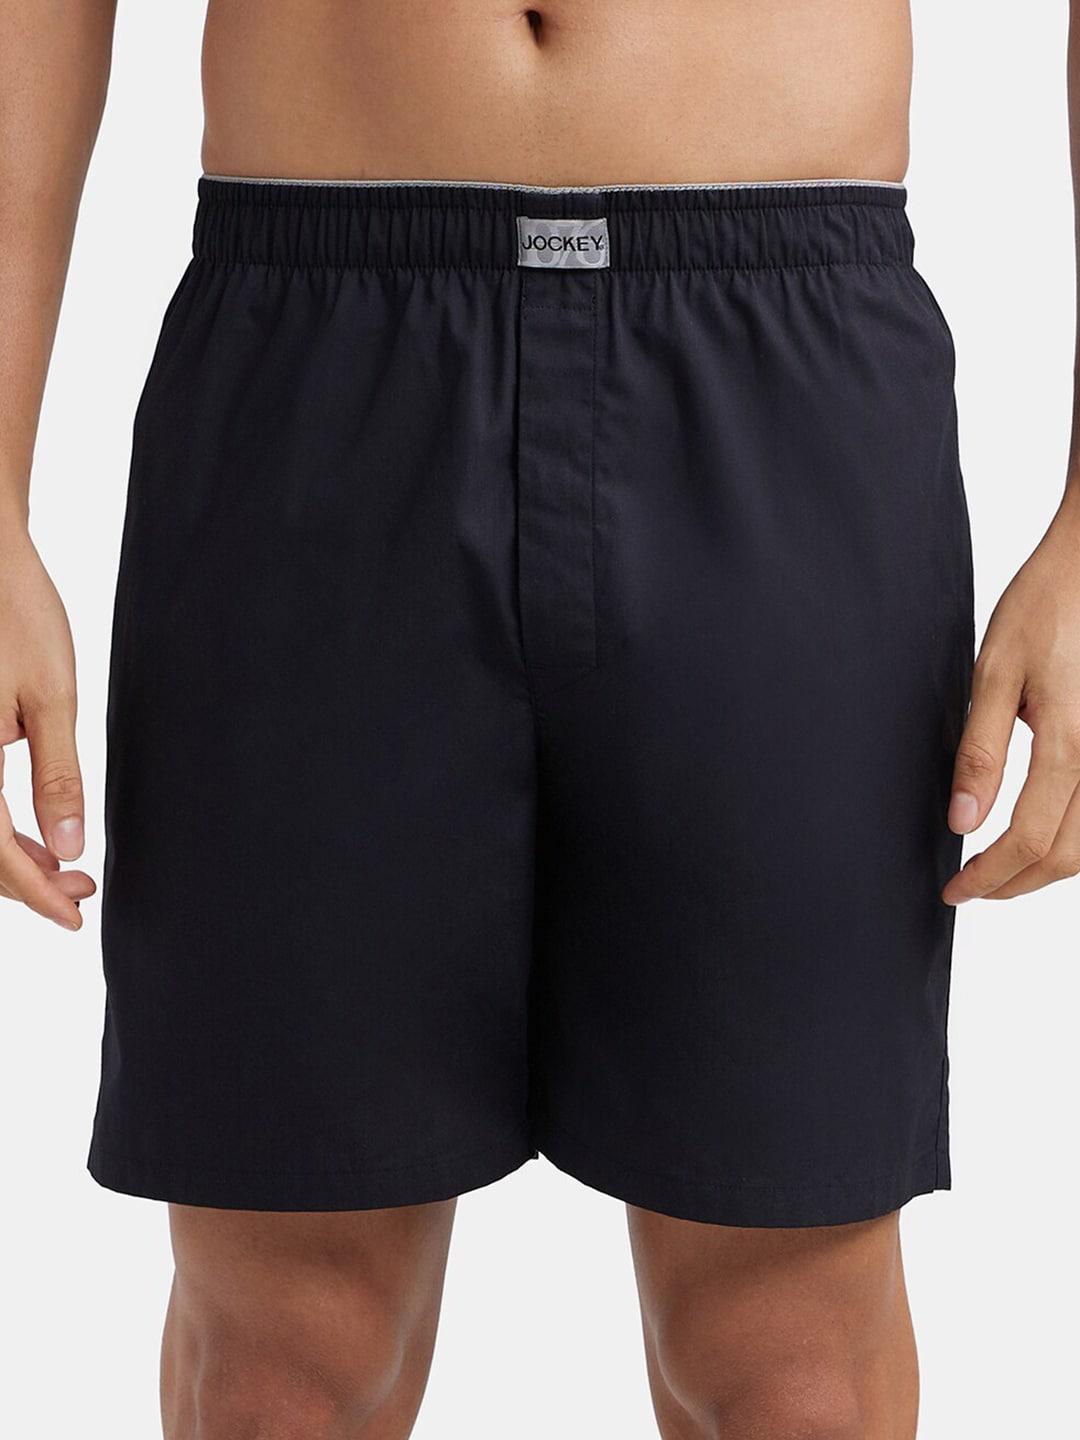 jockey-men-mid-rise-cotton-shorts